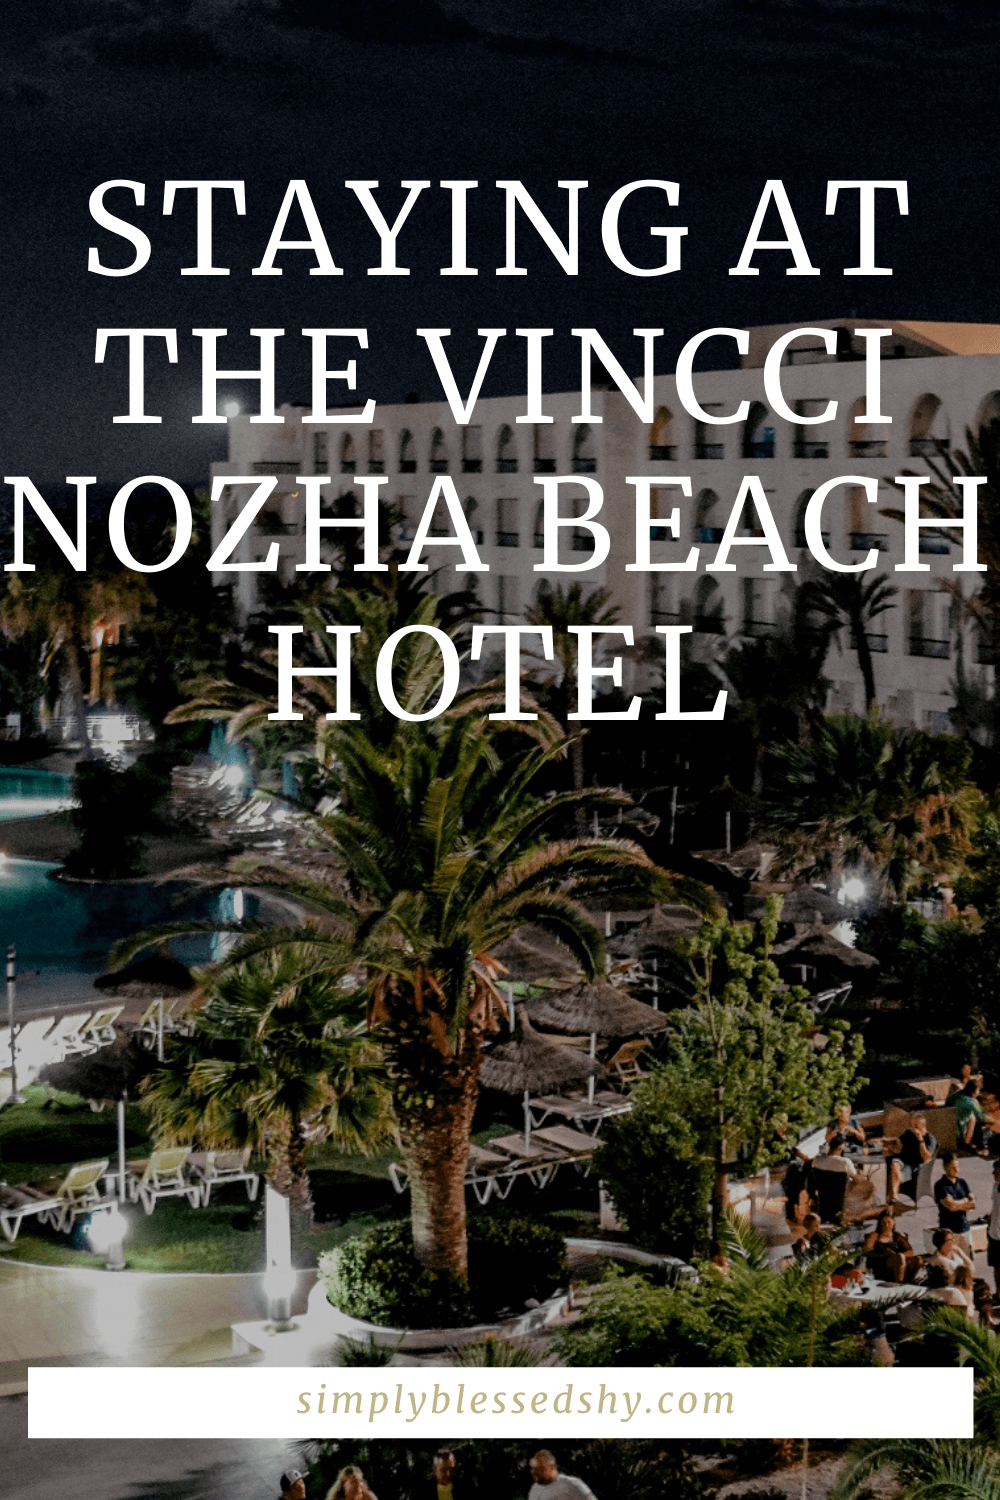 Vincci Nozha Beach Hotel (10)